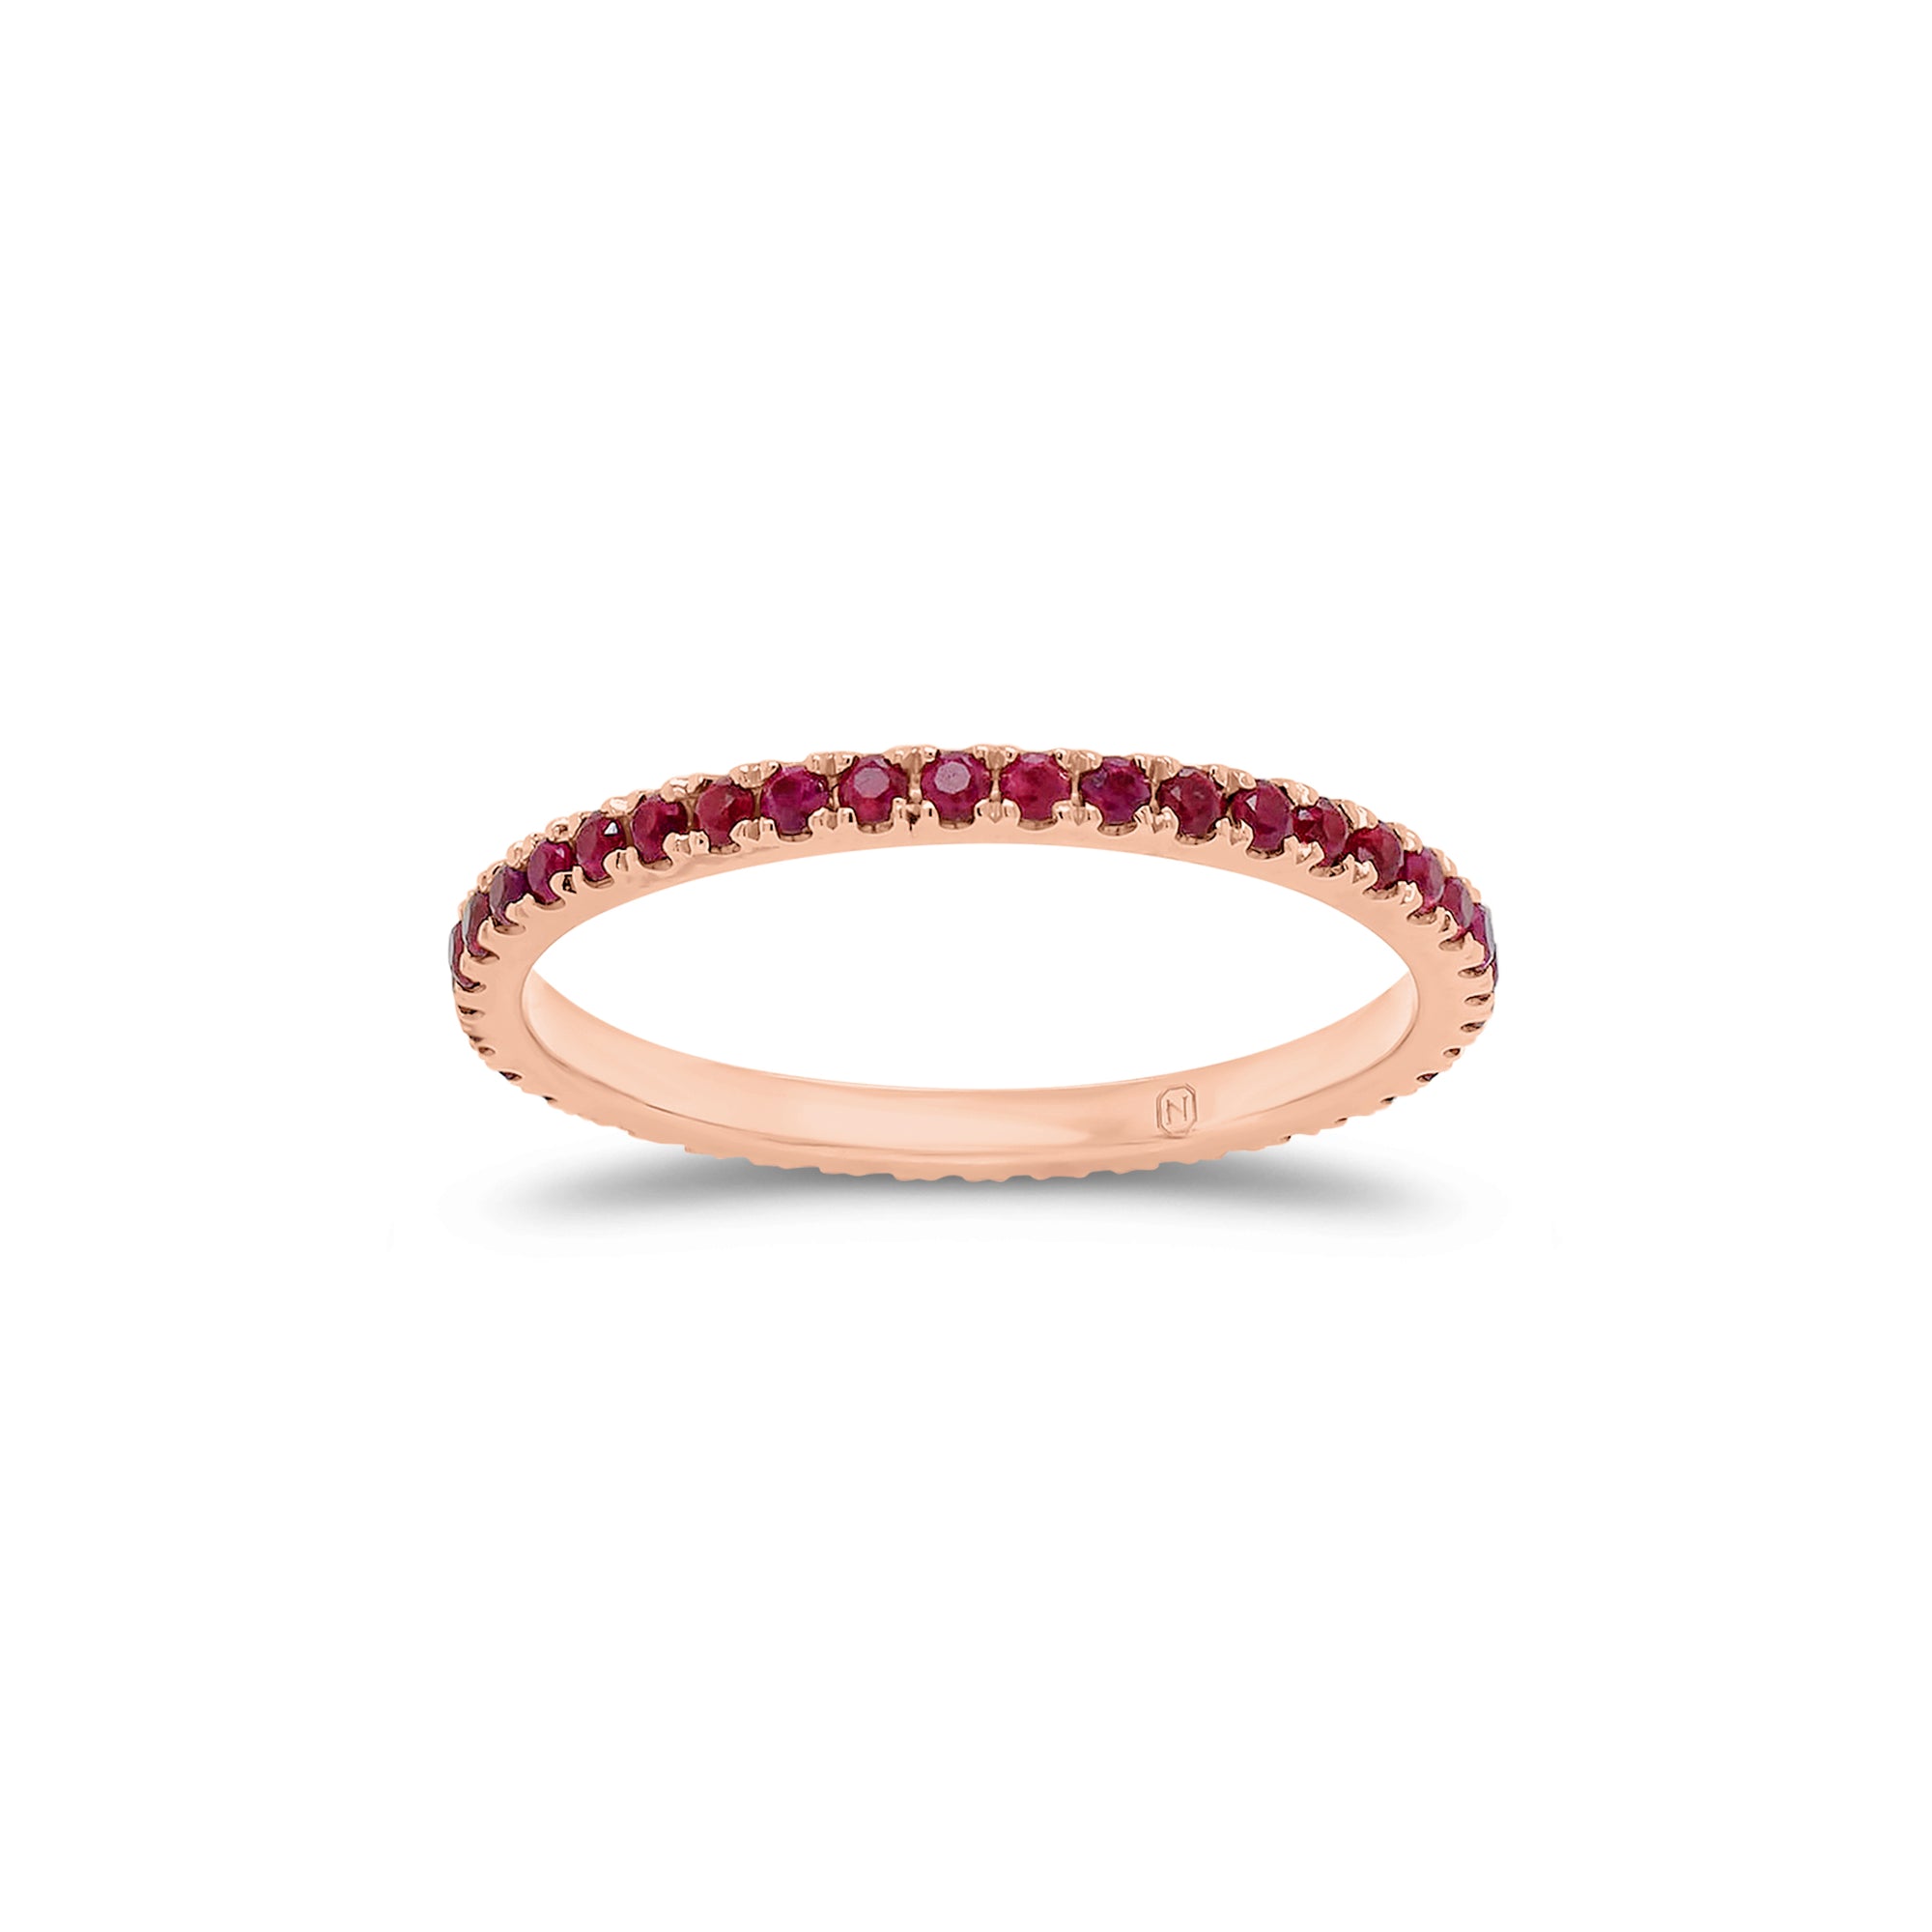 Ruby Eternity Ring - 14K gold weighing 1.14 grams  - 32 rubies weighing 0.73 carats